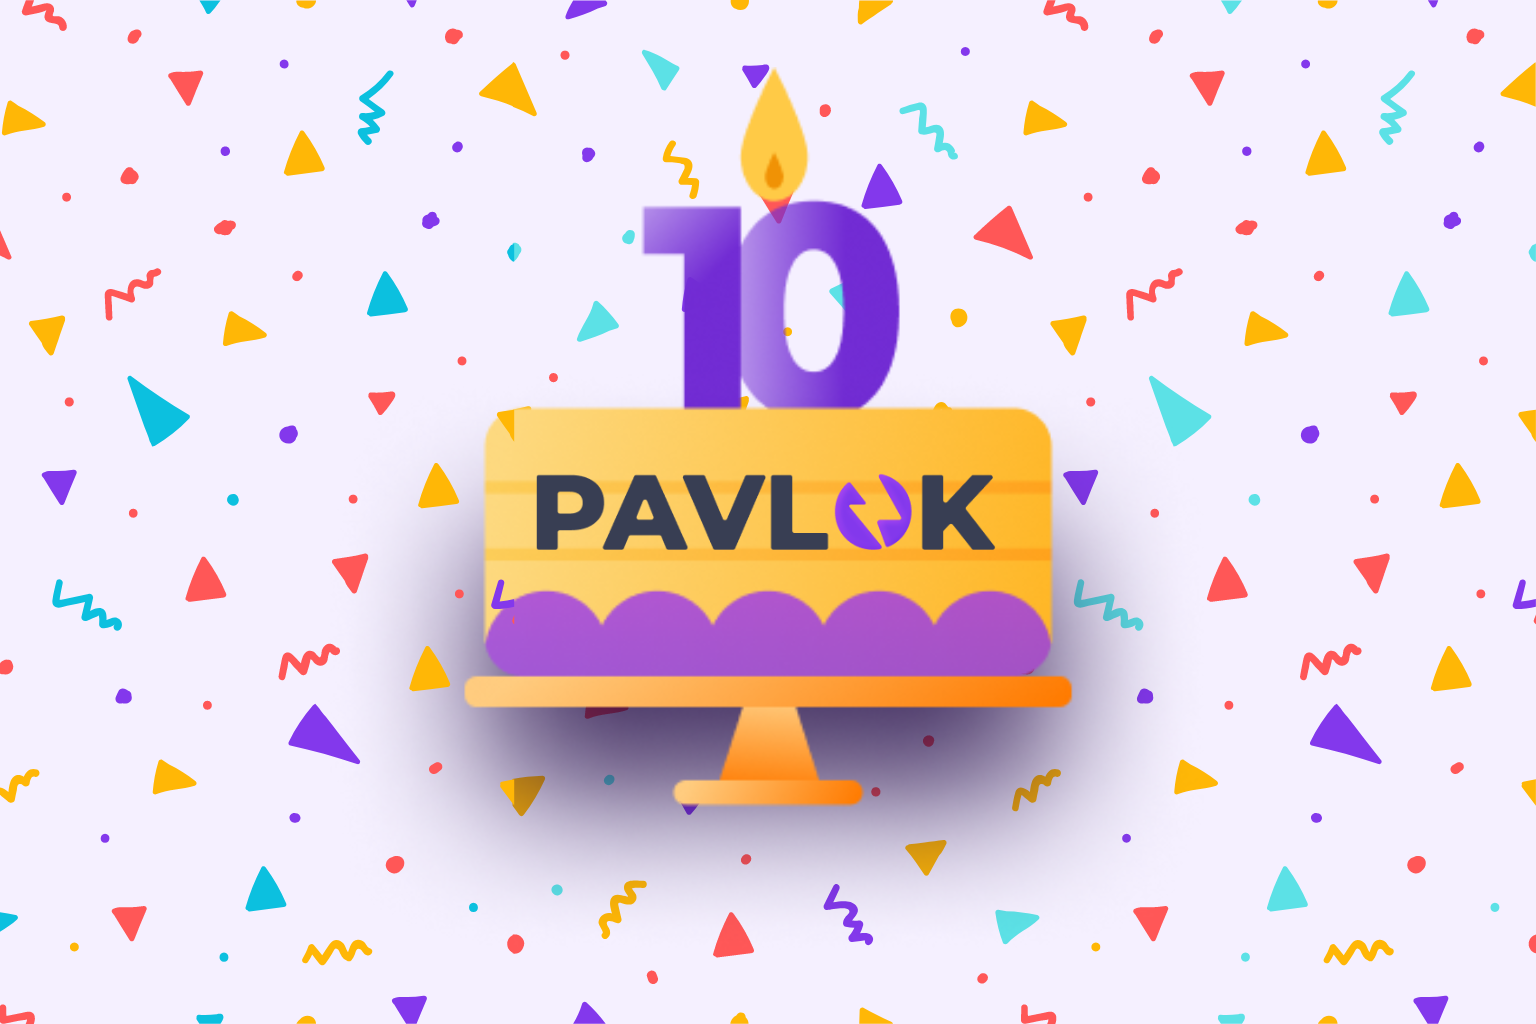 Pavlok 10th Anniversary Sale